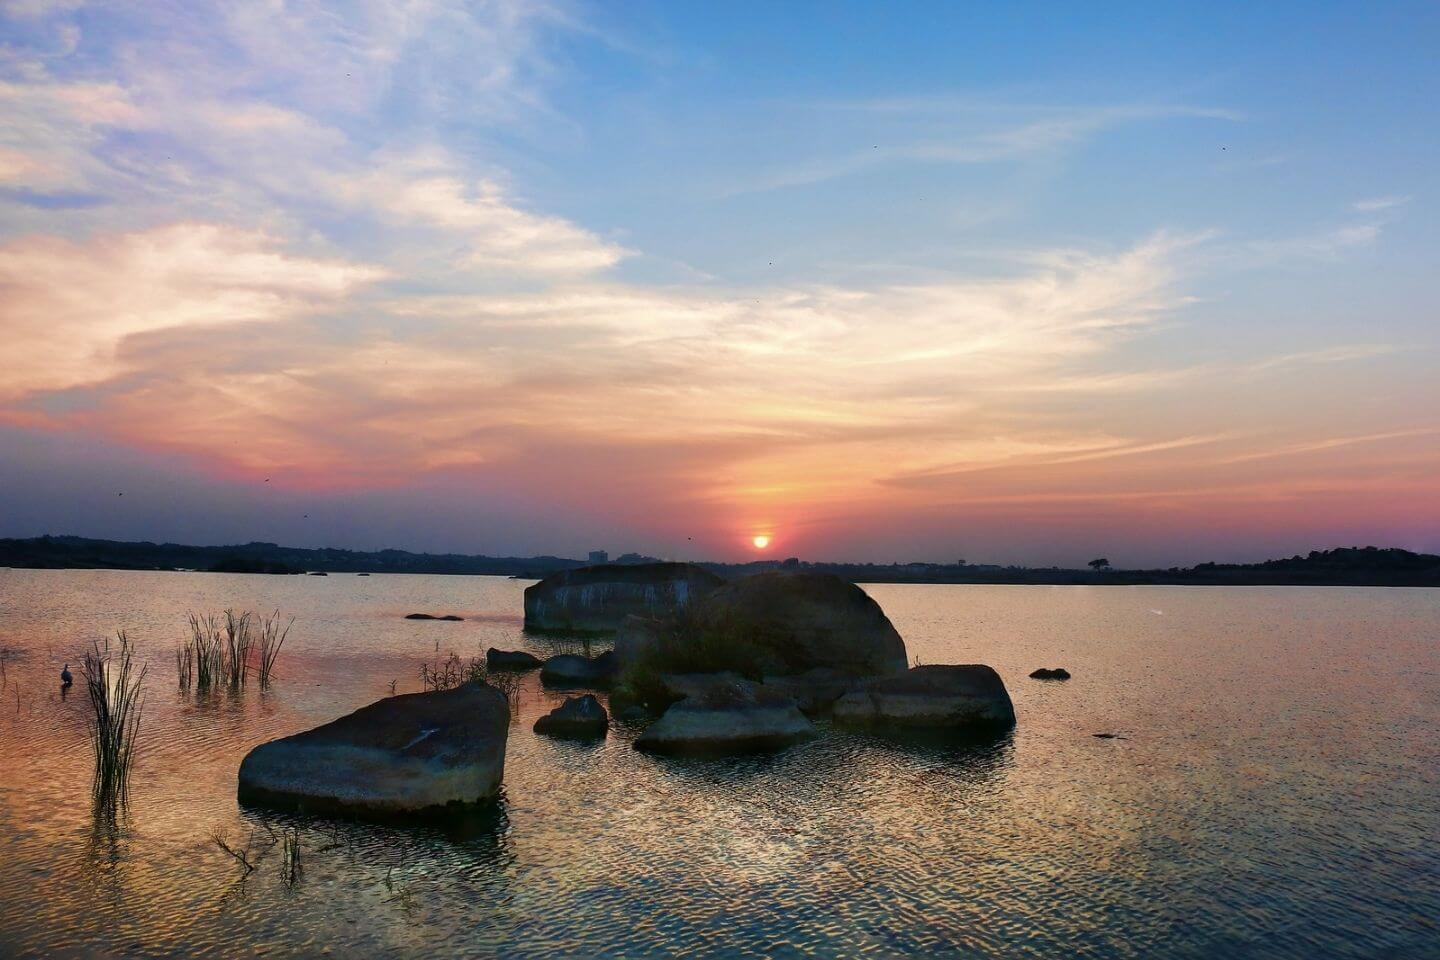 Shamirpet Lake Popular Picnic Place near Hyderabad